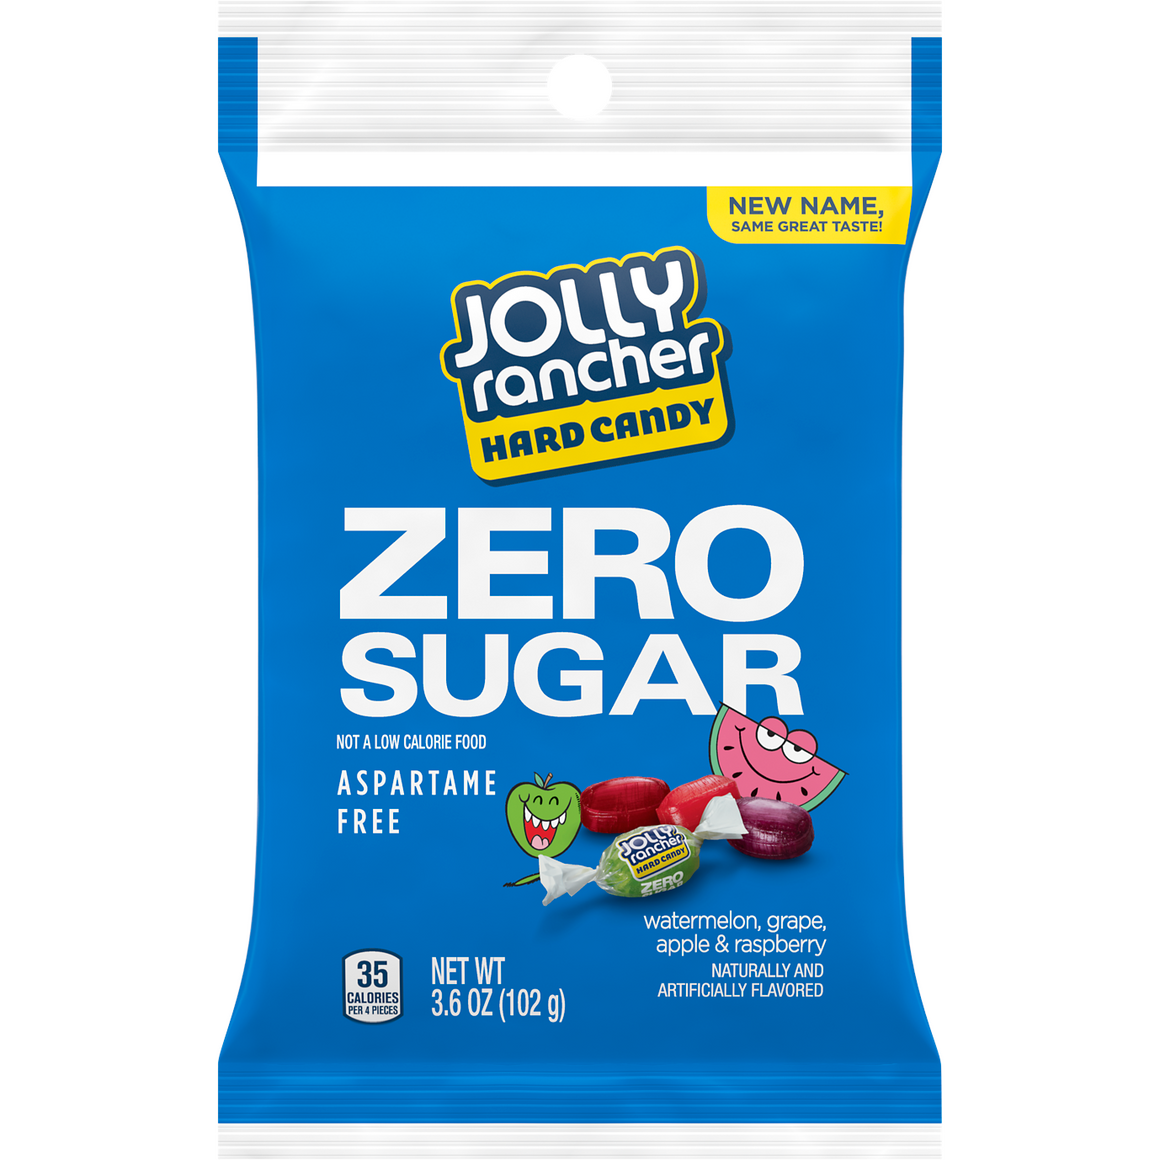 Hershey's - Zero Sugar Candy - Jolly Rancher - 3 oz Bag